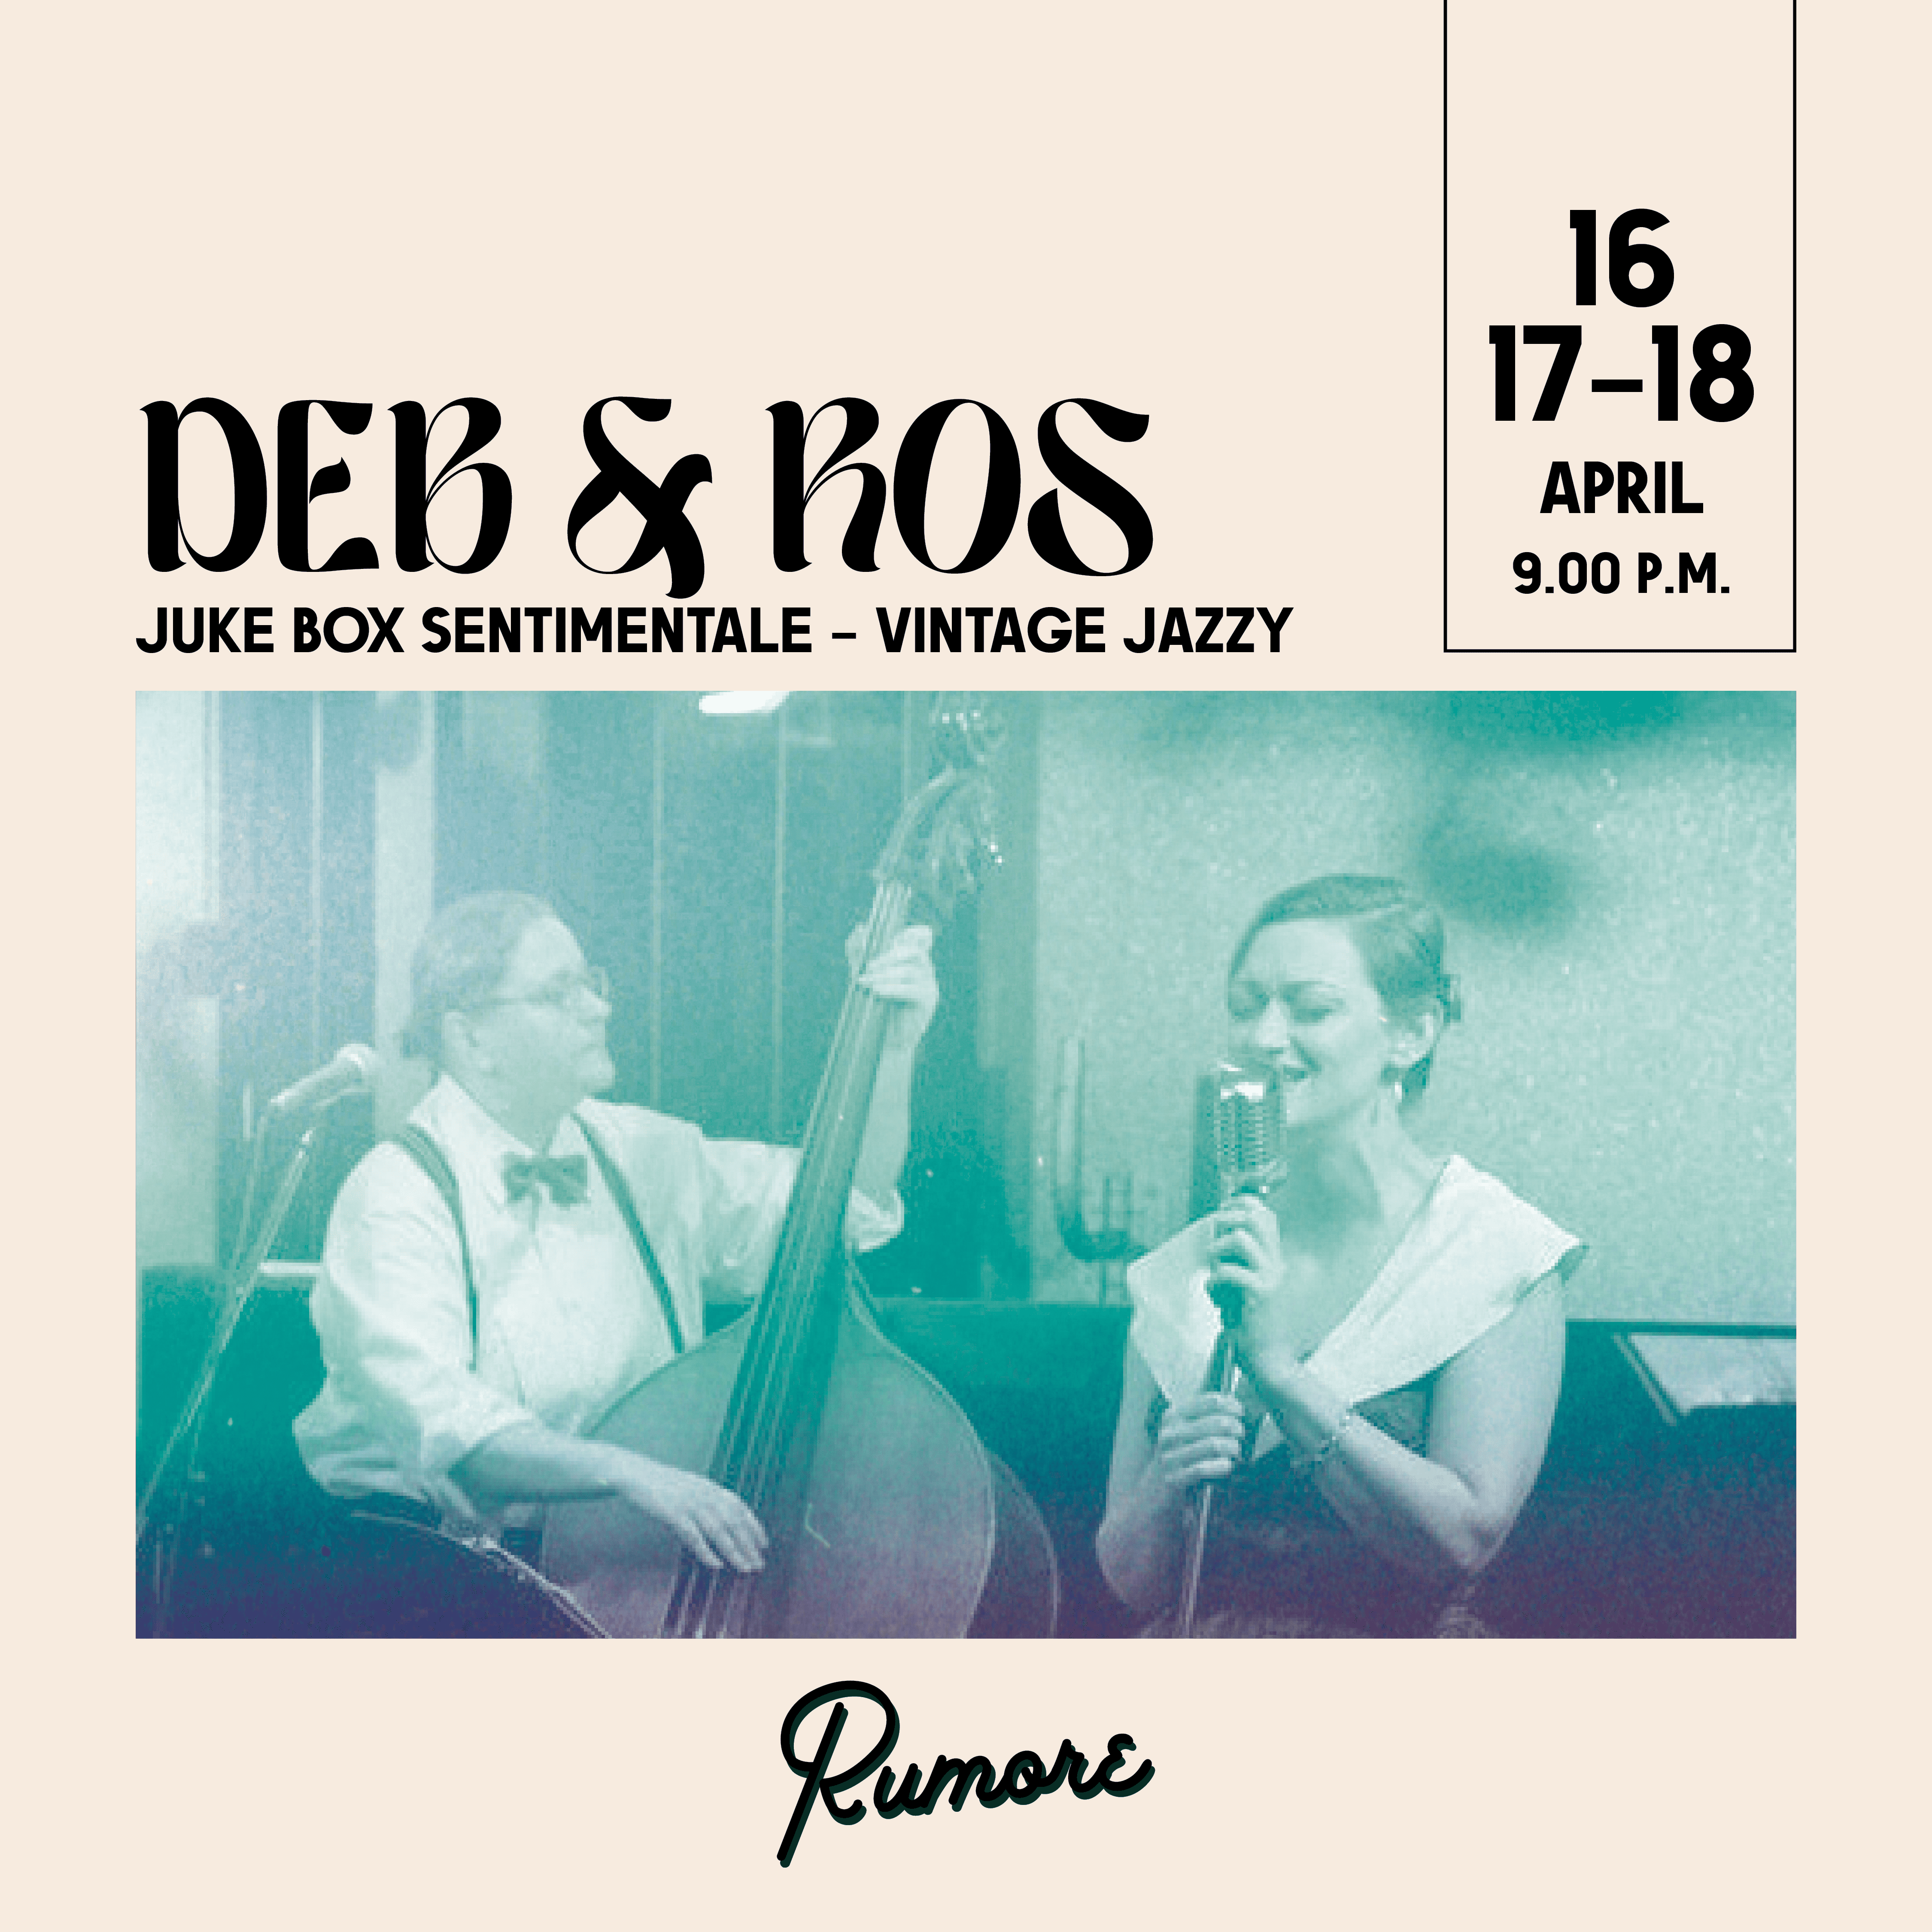 Deb & Ros juke box sentimentale - vintage jazzy il 16, 17 e 18 aprile dalle 21.00